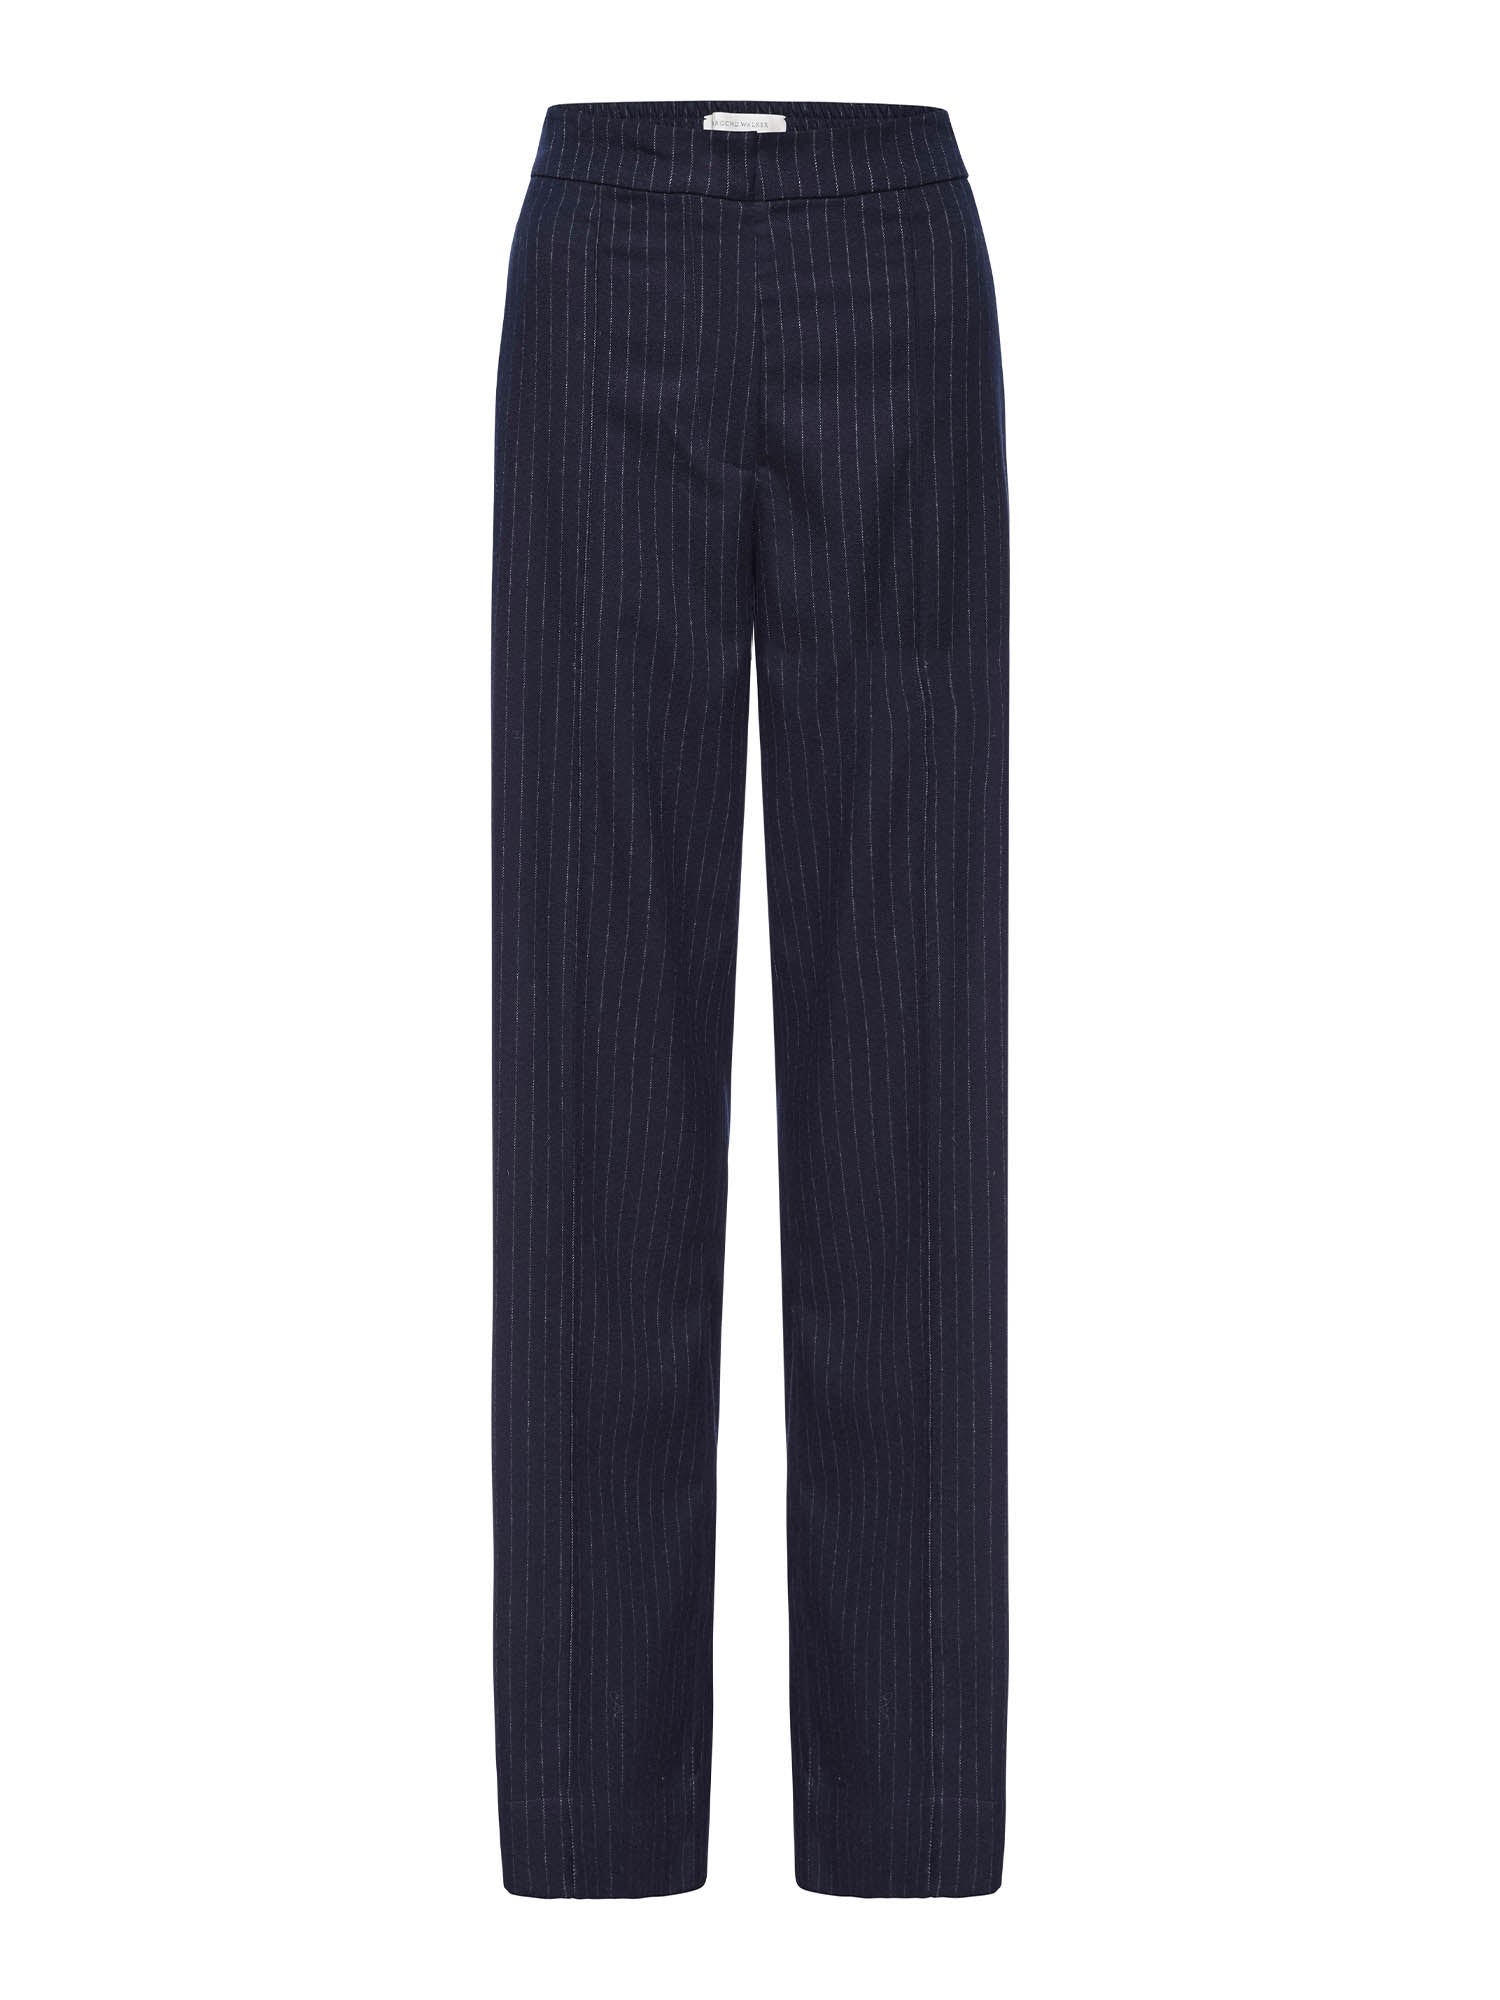 ASOS DESIGN straight leg 3 piece suit trouser in navy pinstripe | ASOS